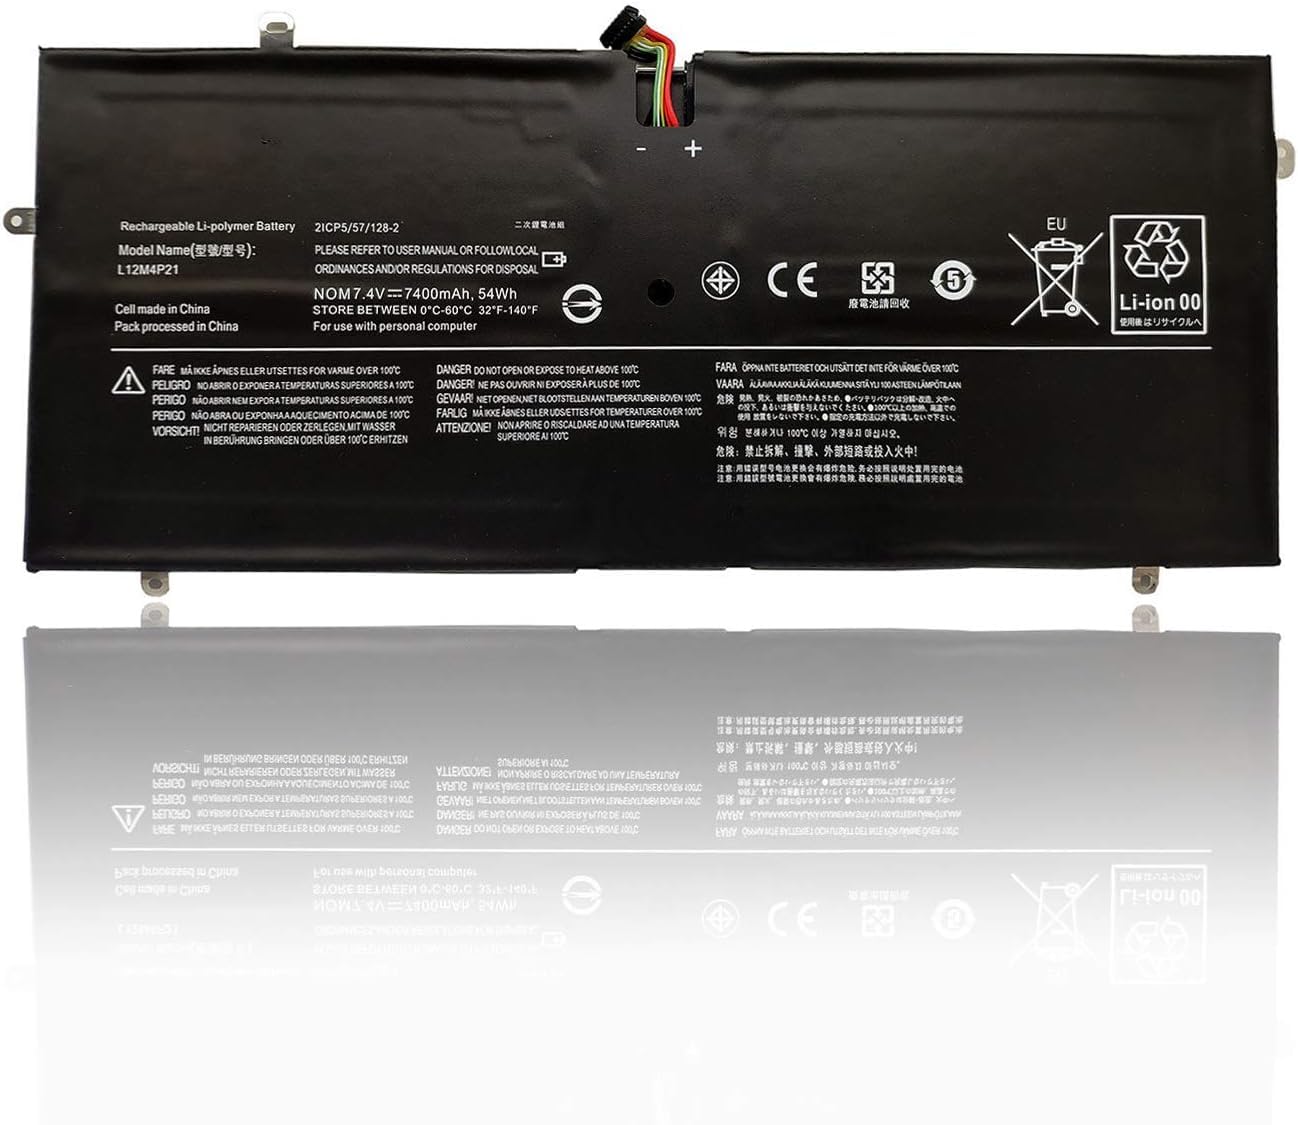 WISTAR Lenovo L12M4P21 Battery for Lenovo Yoga 2 Pro 13 Series L13S4P21 121500156